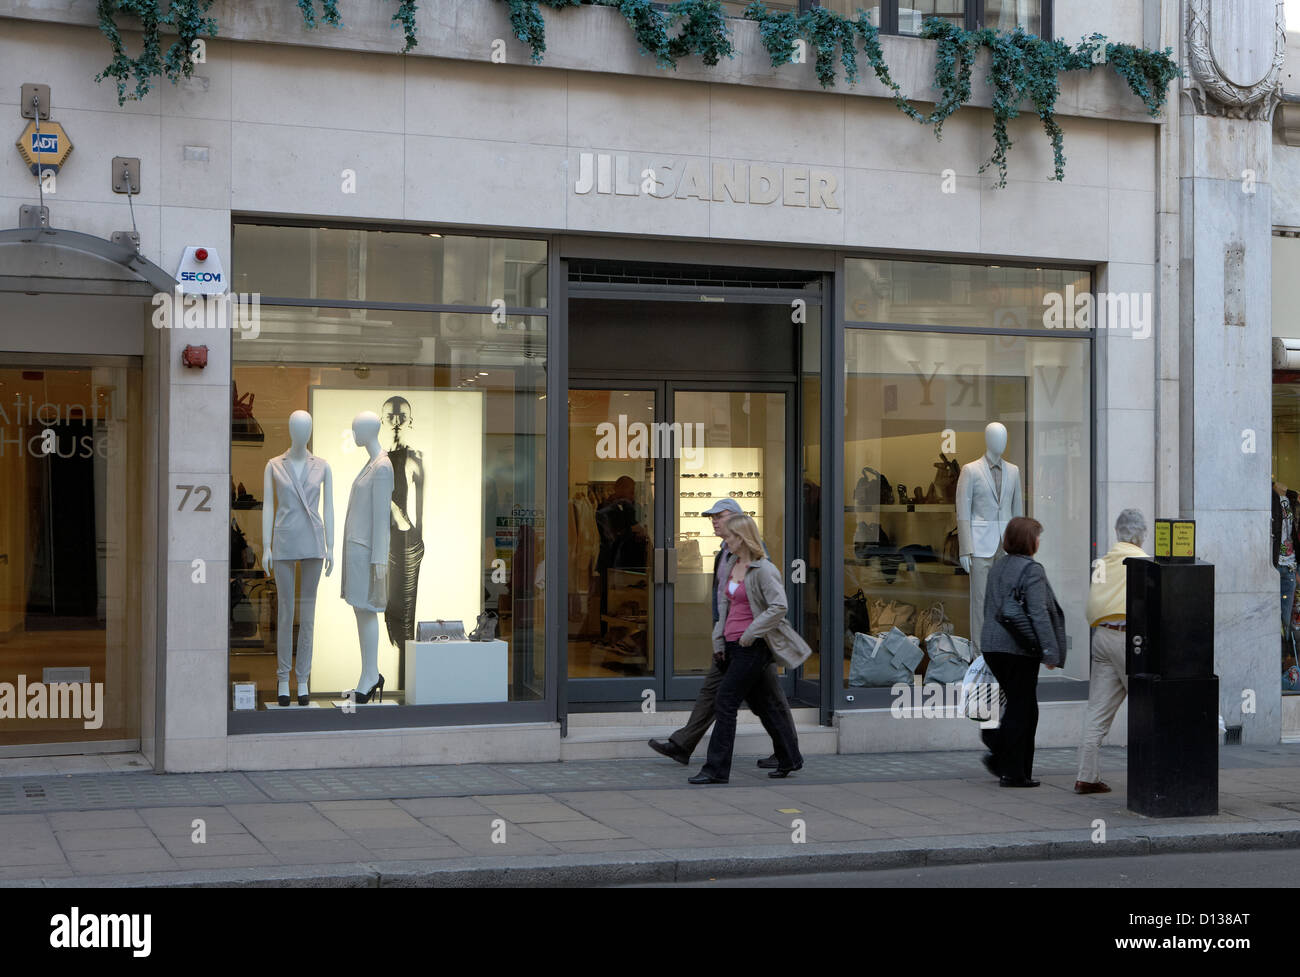 London, United Kingdom. a Nobel boutique brand Jil Sander Stock Photo ...